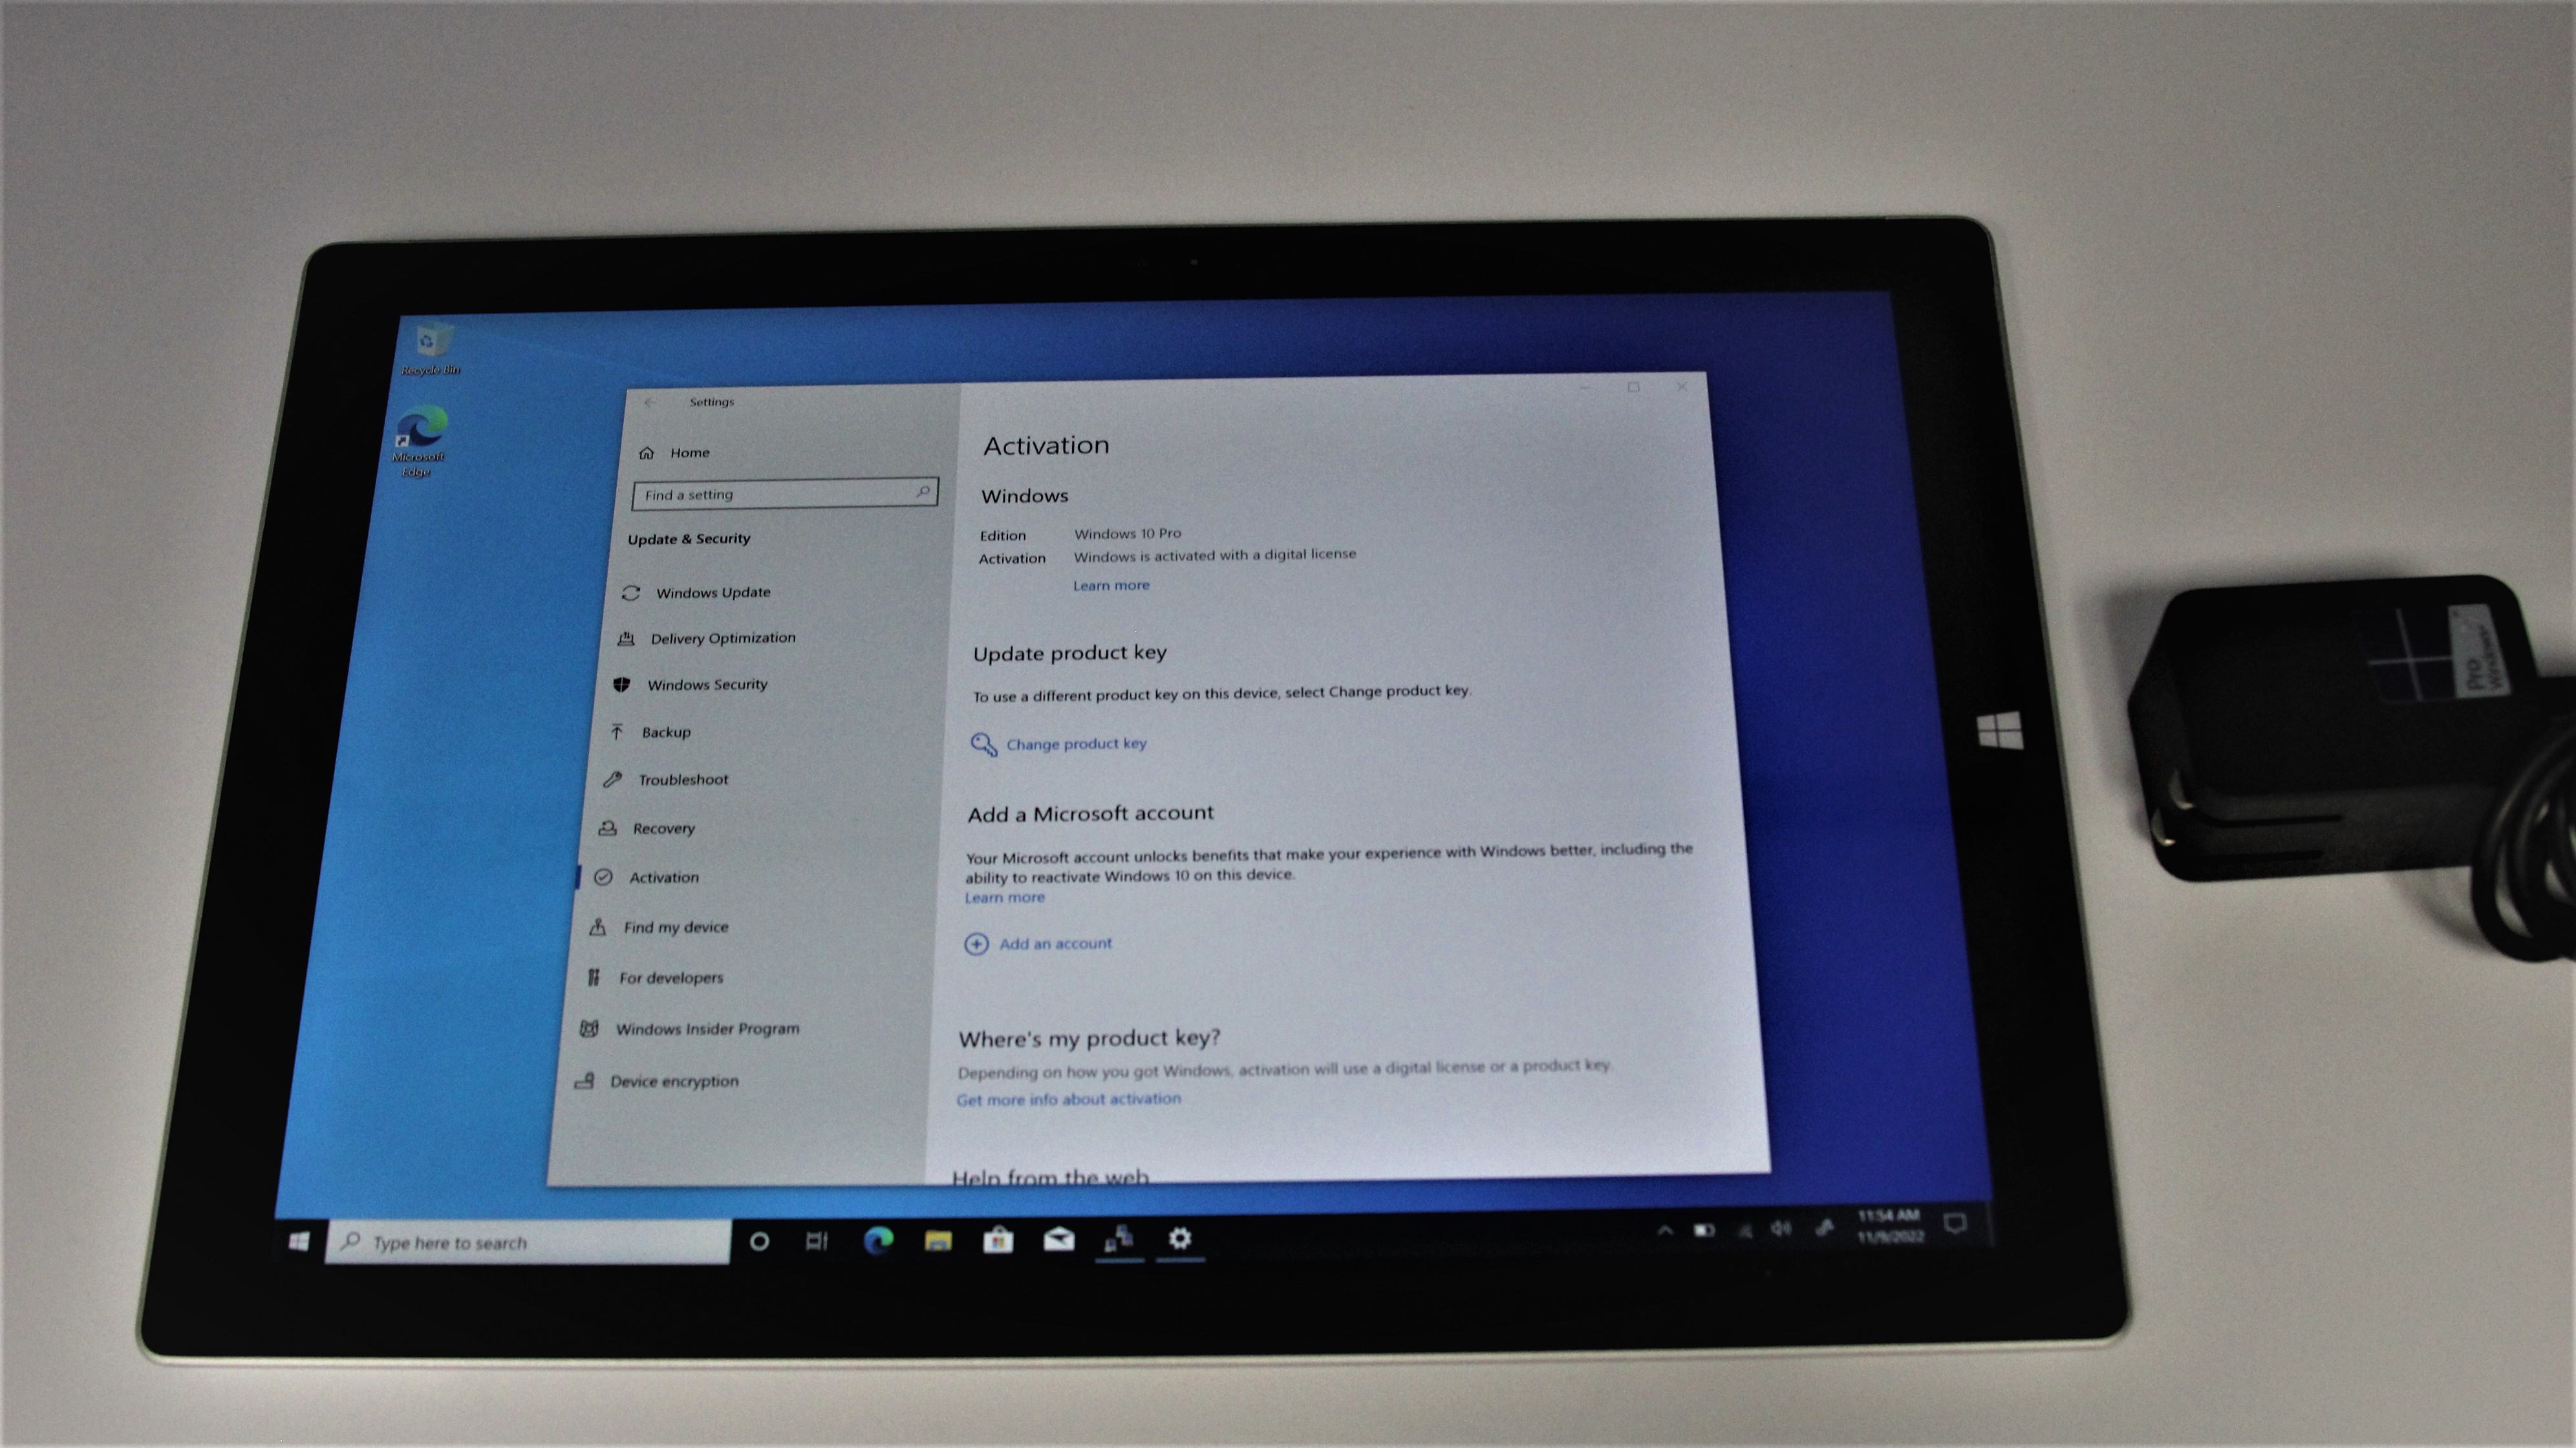 Microsoft Surface 3 1645 10.8